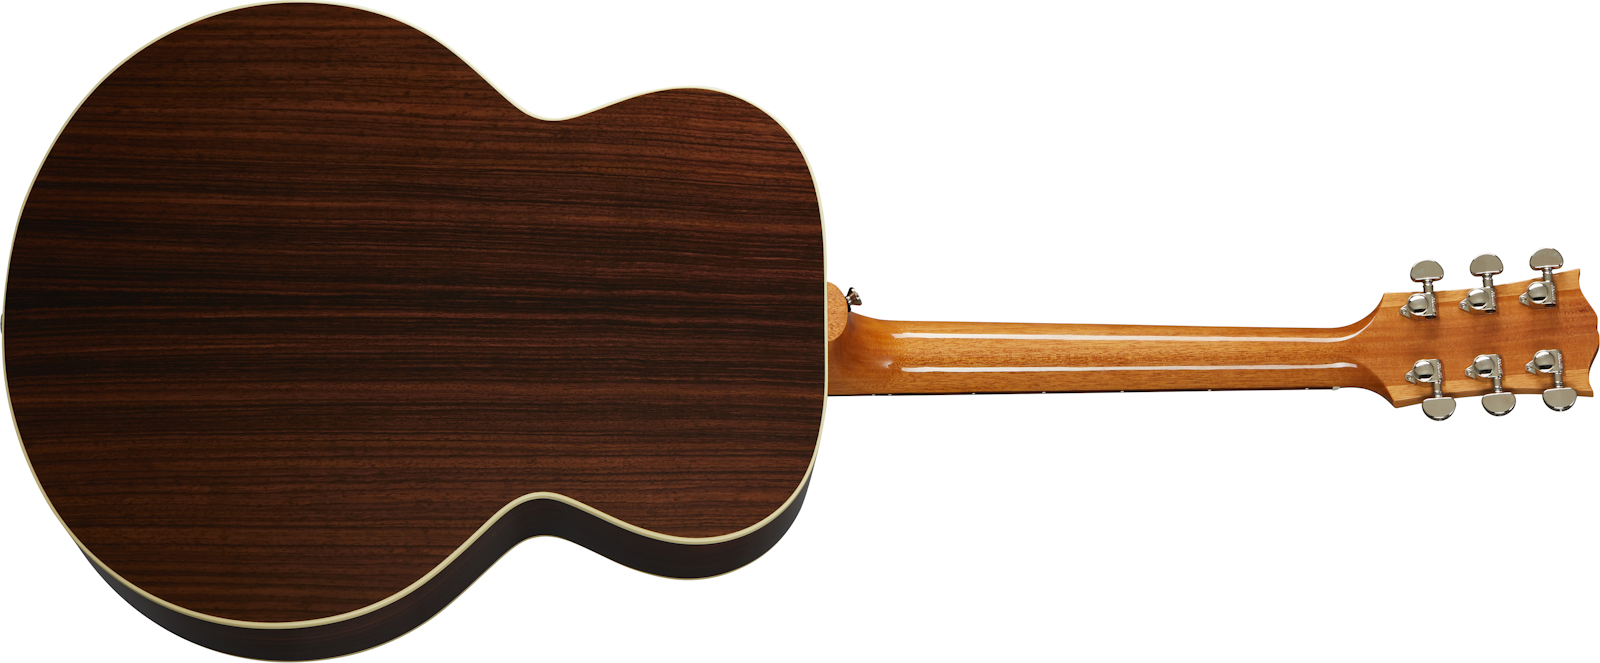 Gibson Sj-200 Studio Rosewood 2020 Super Jumbo Epicea Palissandre Rw - Burst - Elektroakustische Gitarre - Variation 1